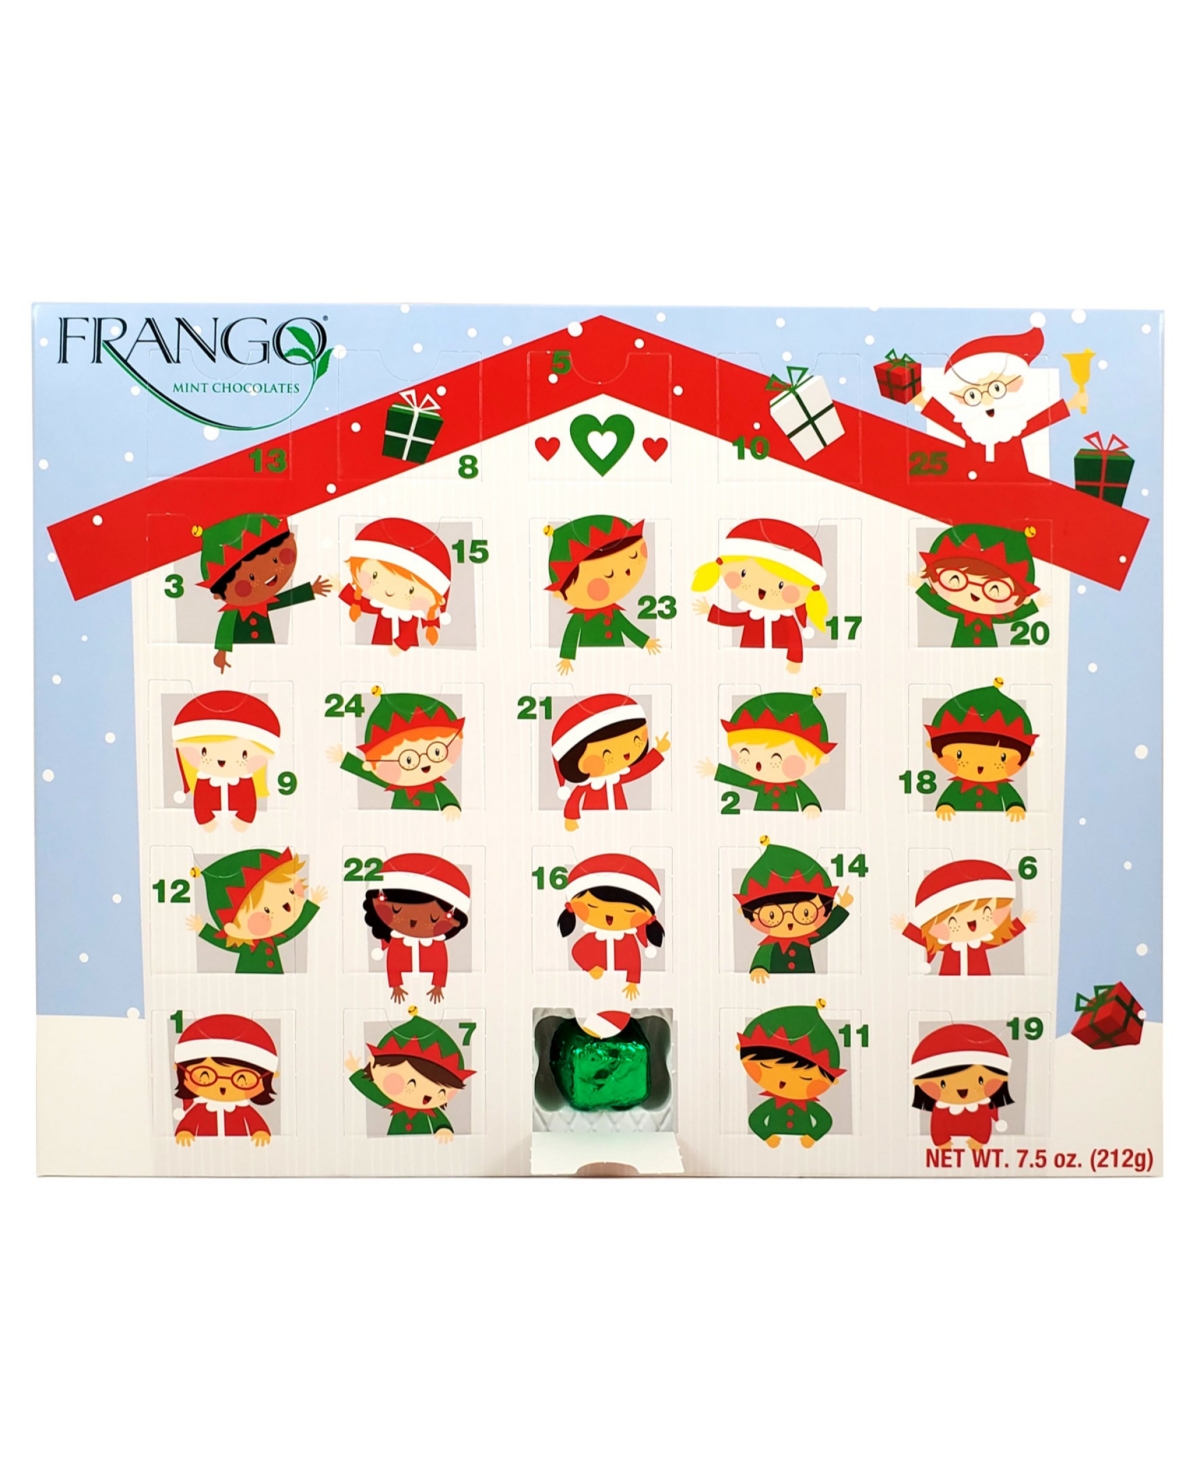 Frango Chocolates Holiday Chocolate Advent Calendar $11.20 & More at Macy's w/ Free Store Pickup